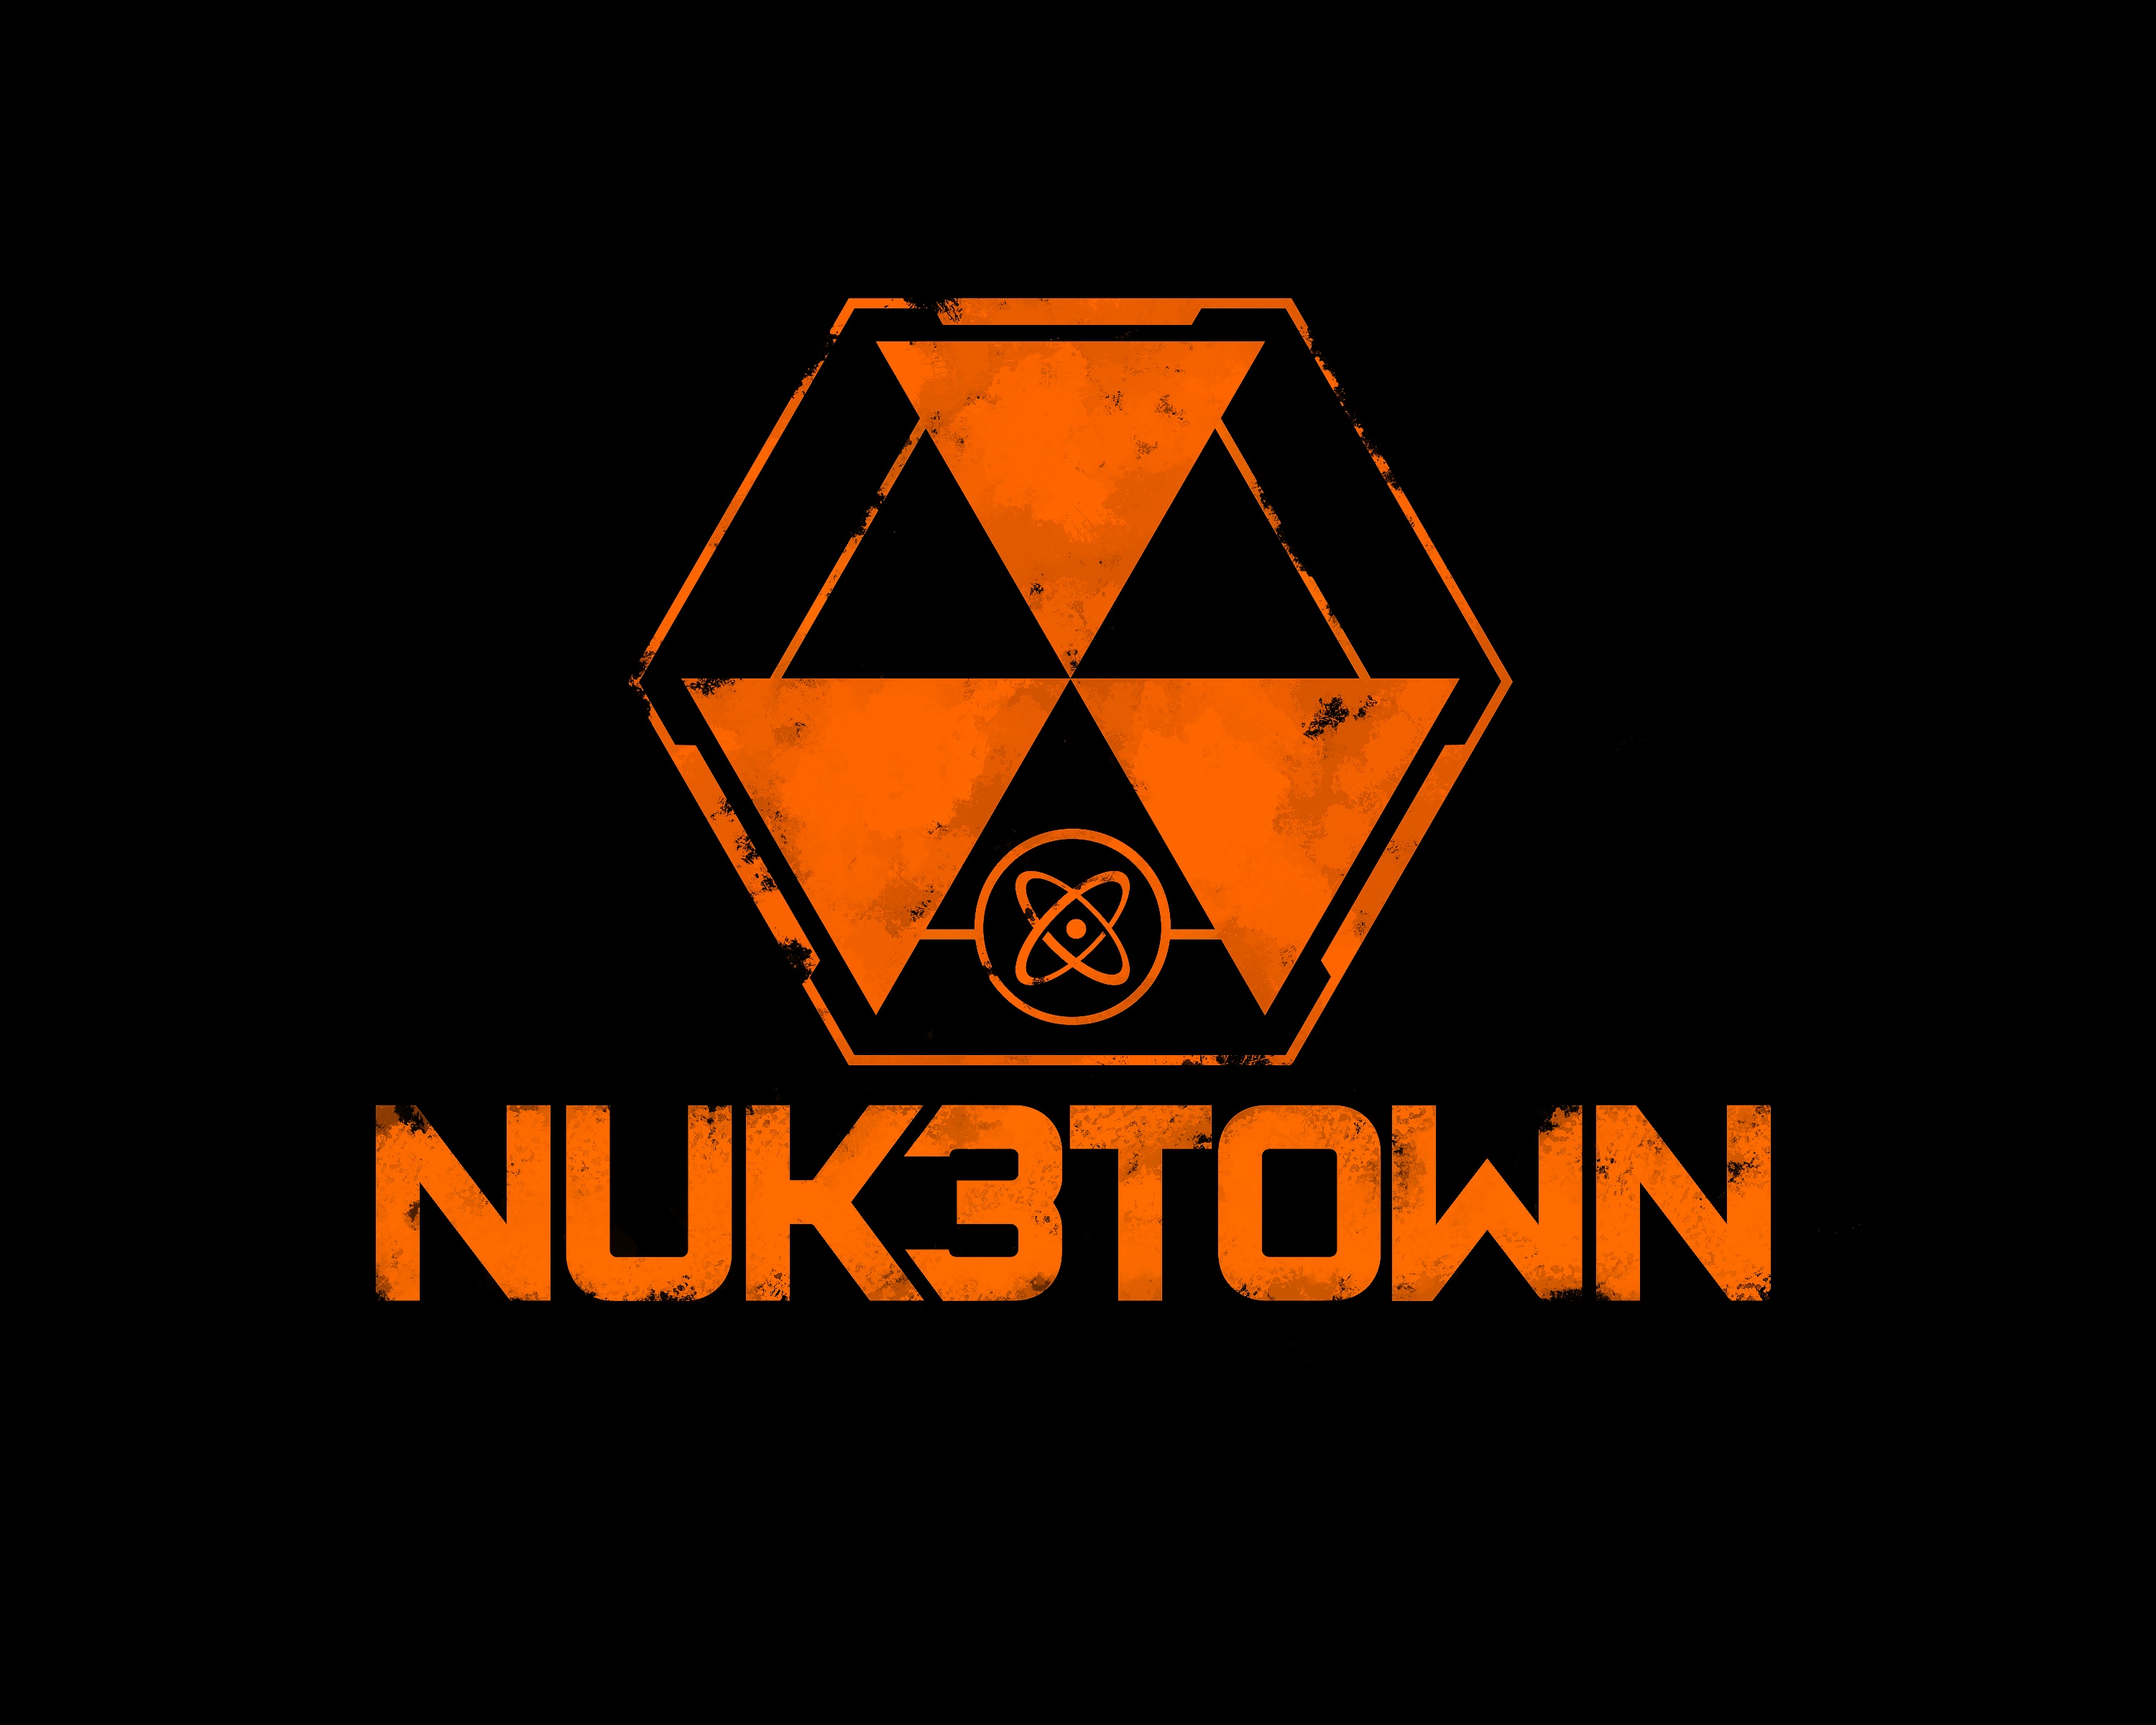 Black Ops 2 Nuketown 2025 Dlc Codes Free